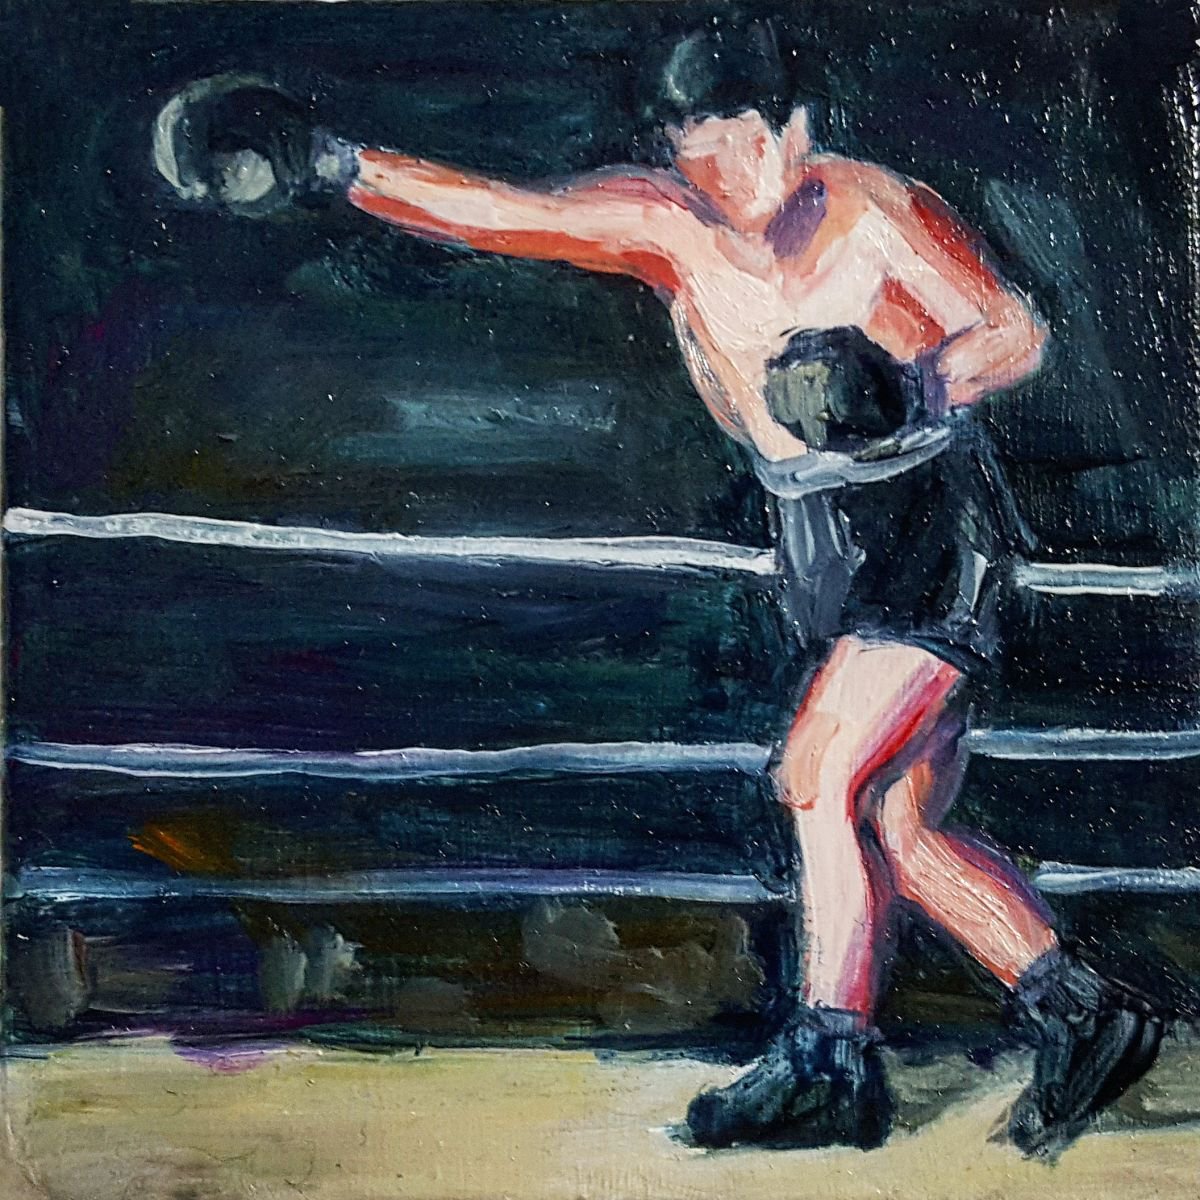 Fighter No.1 by Samantha Han